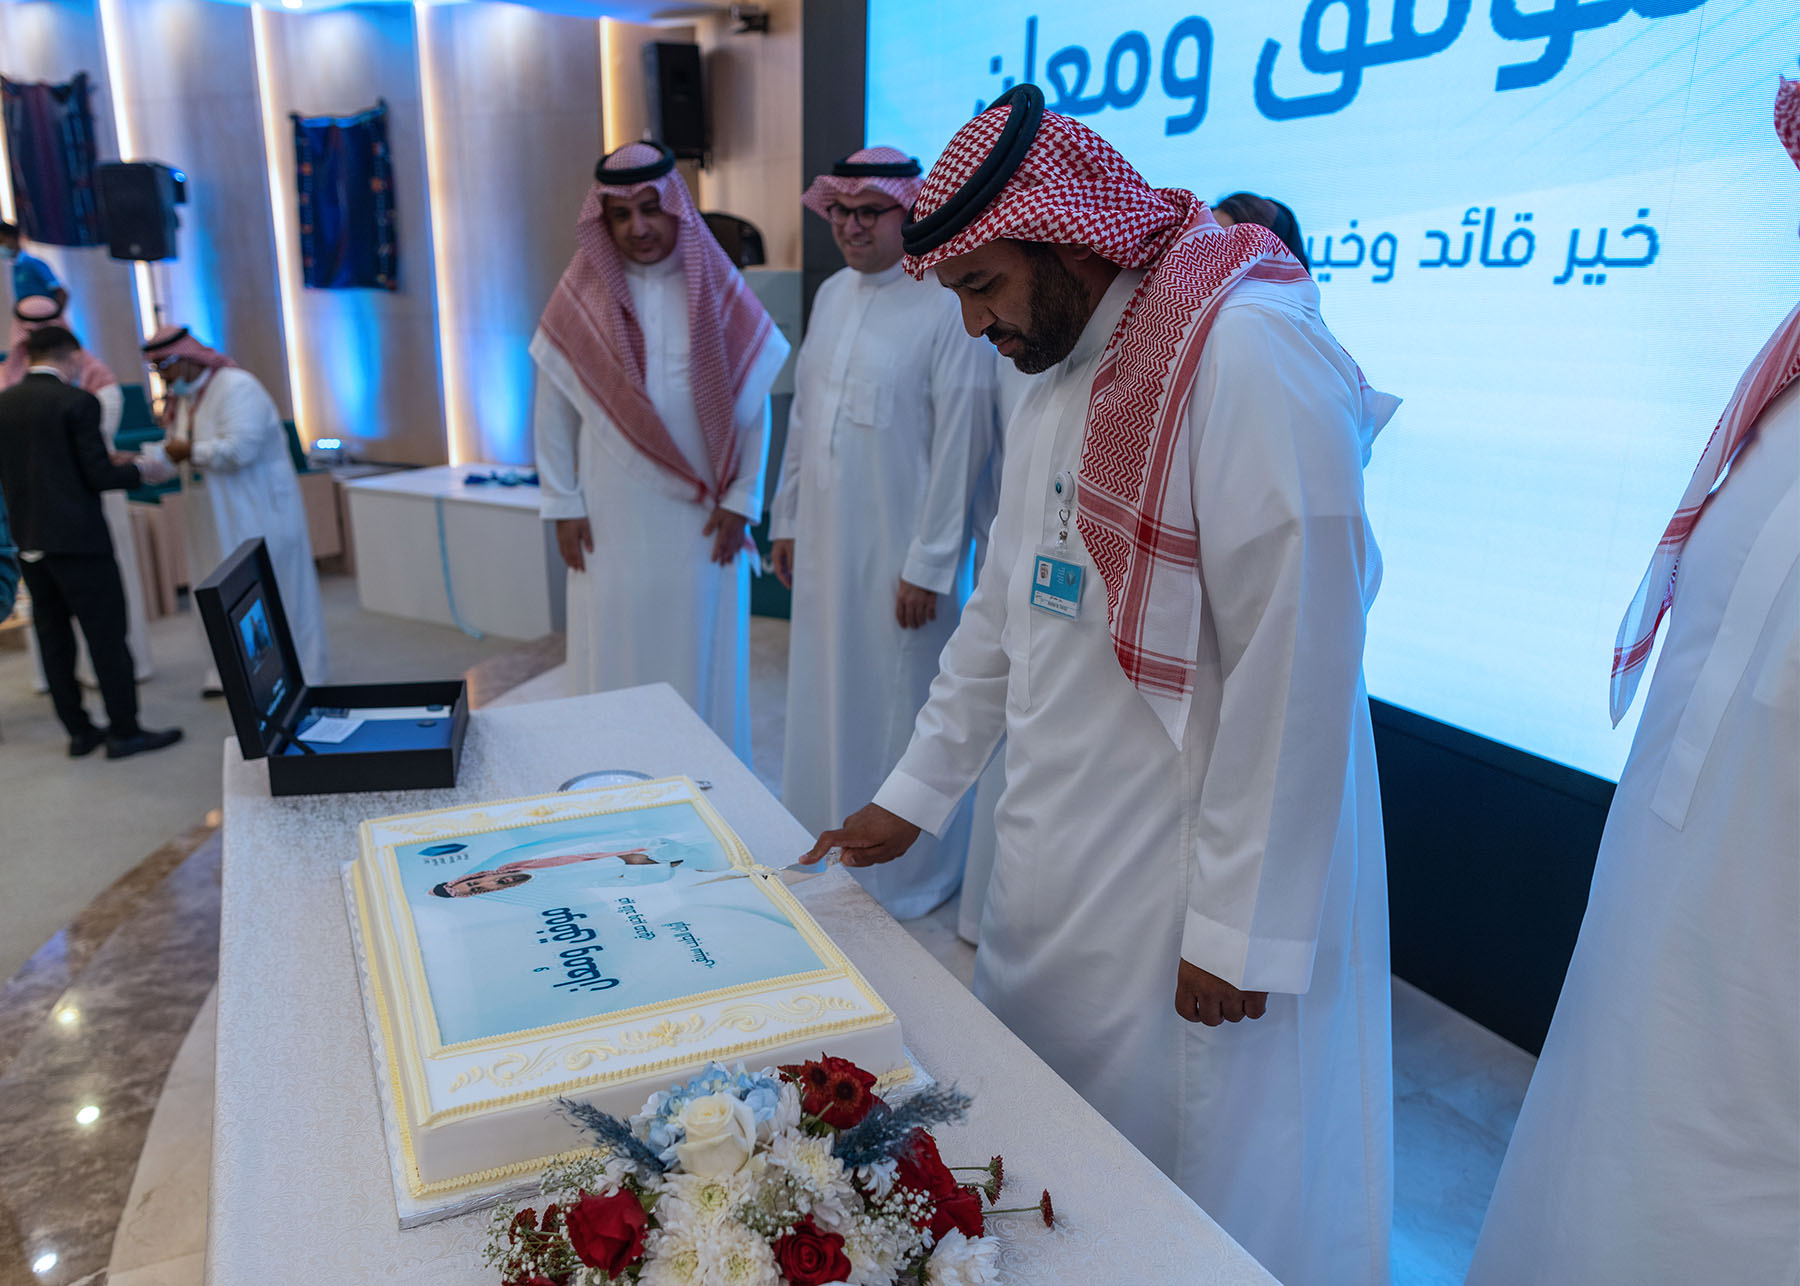 Saudi man cutting cake